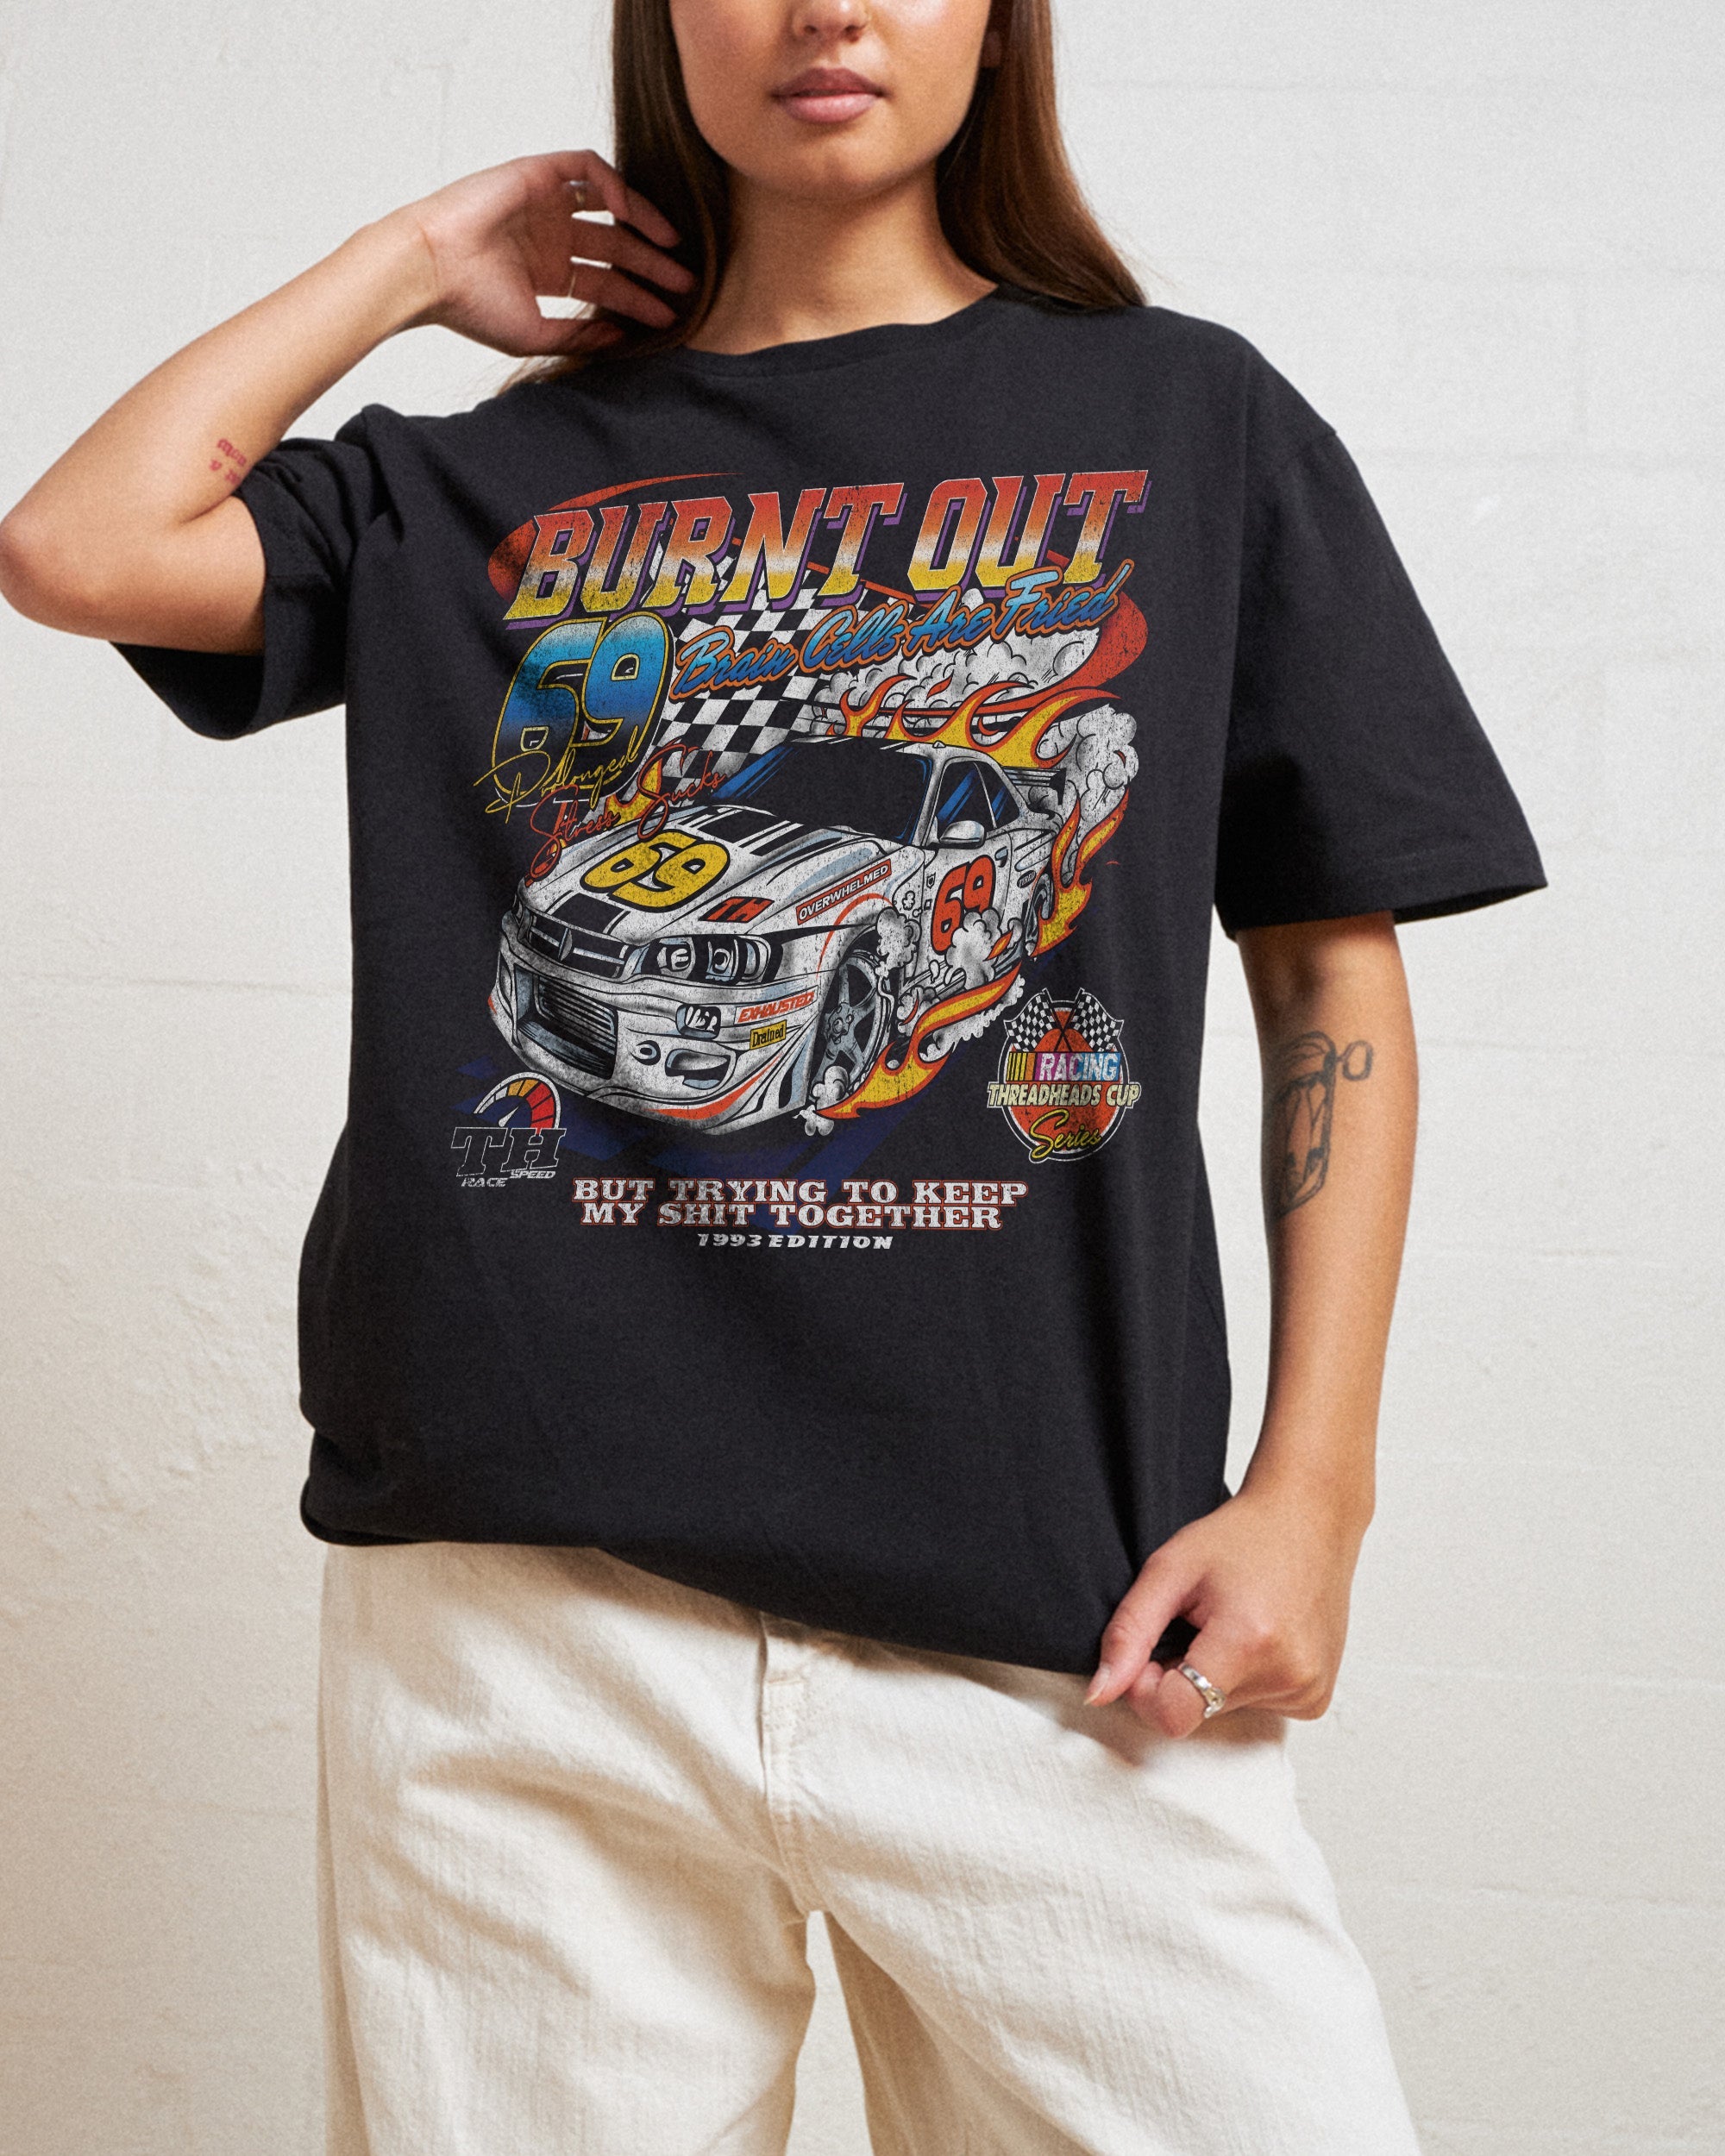 Burnt out T-Shirt Australia Online Black